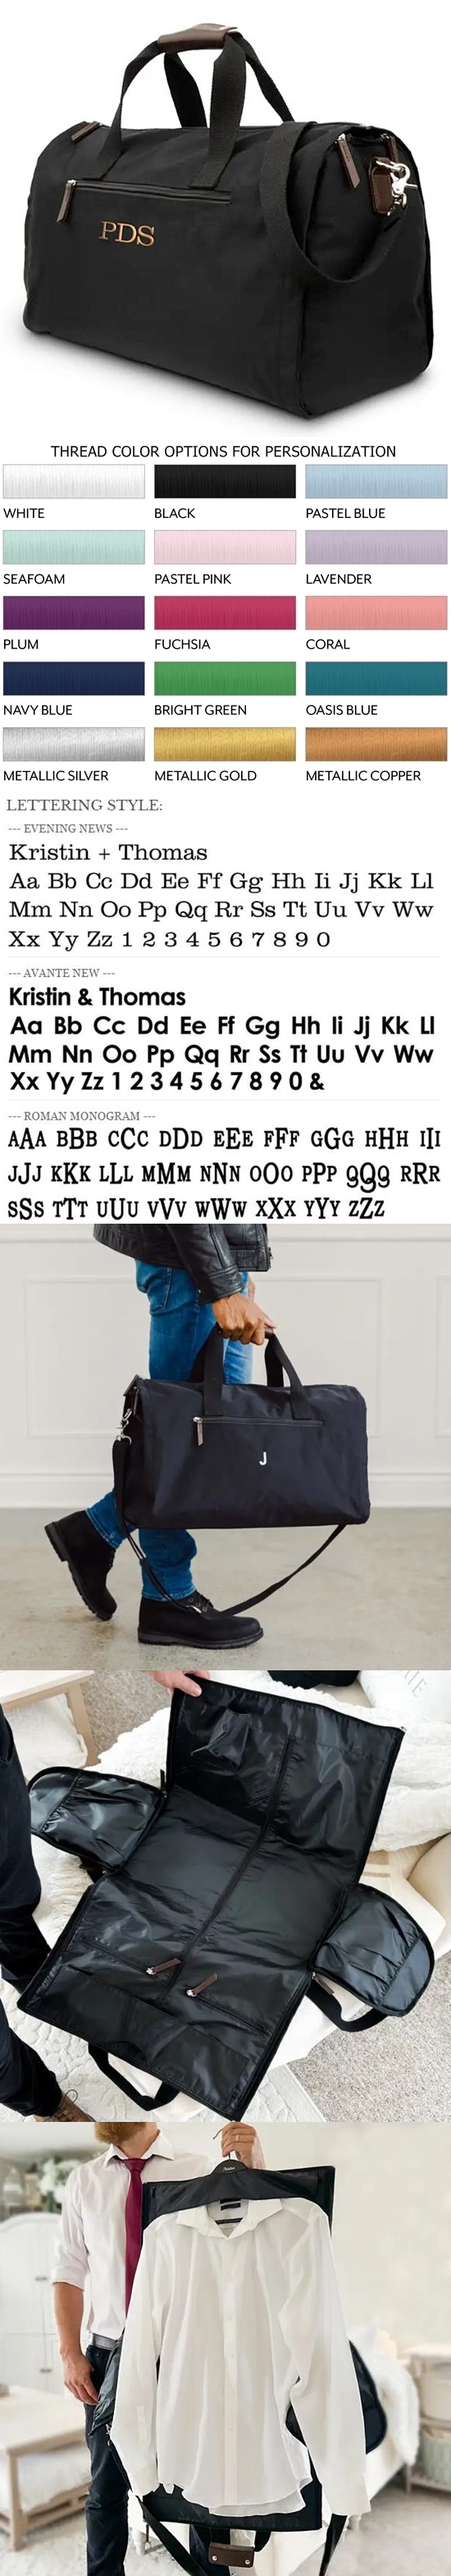 Monogrammed Personalized Convertible Travel Garment/Duffel Bag - Black